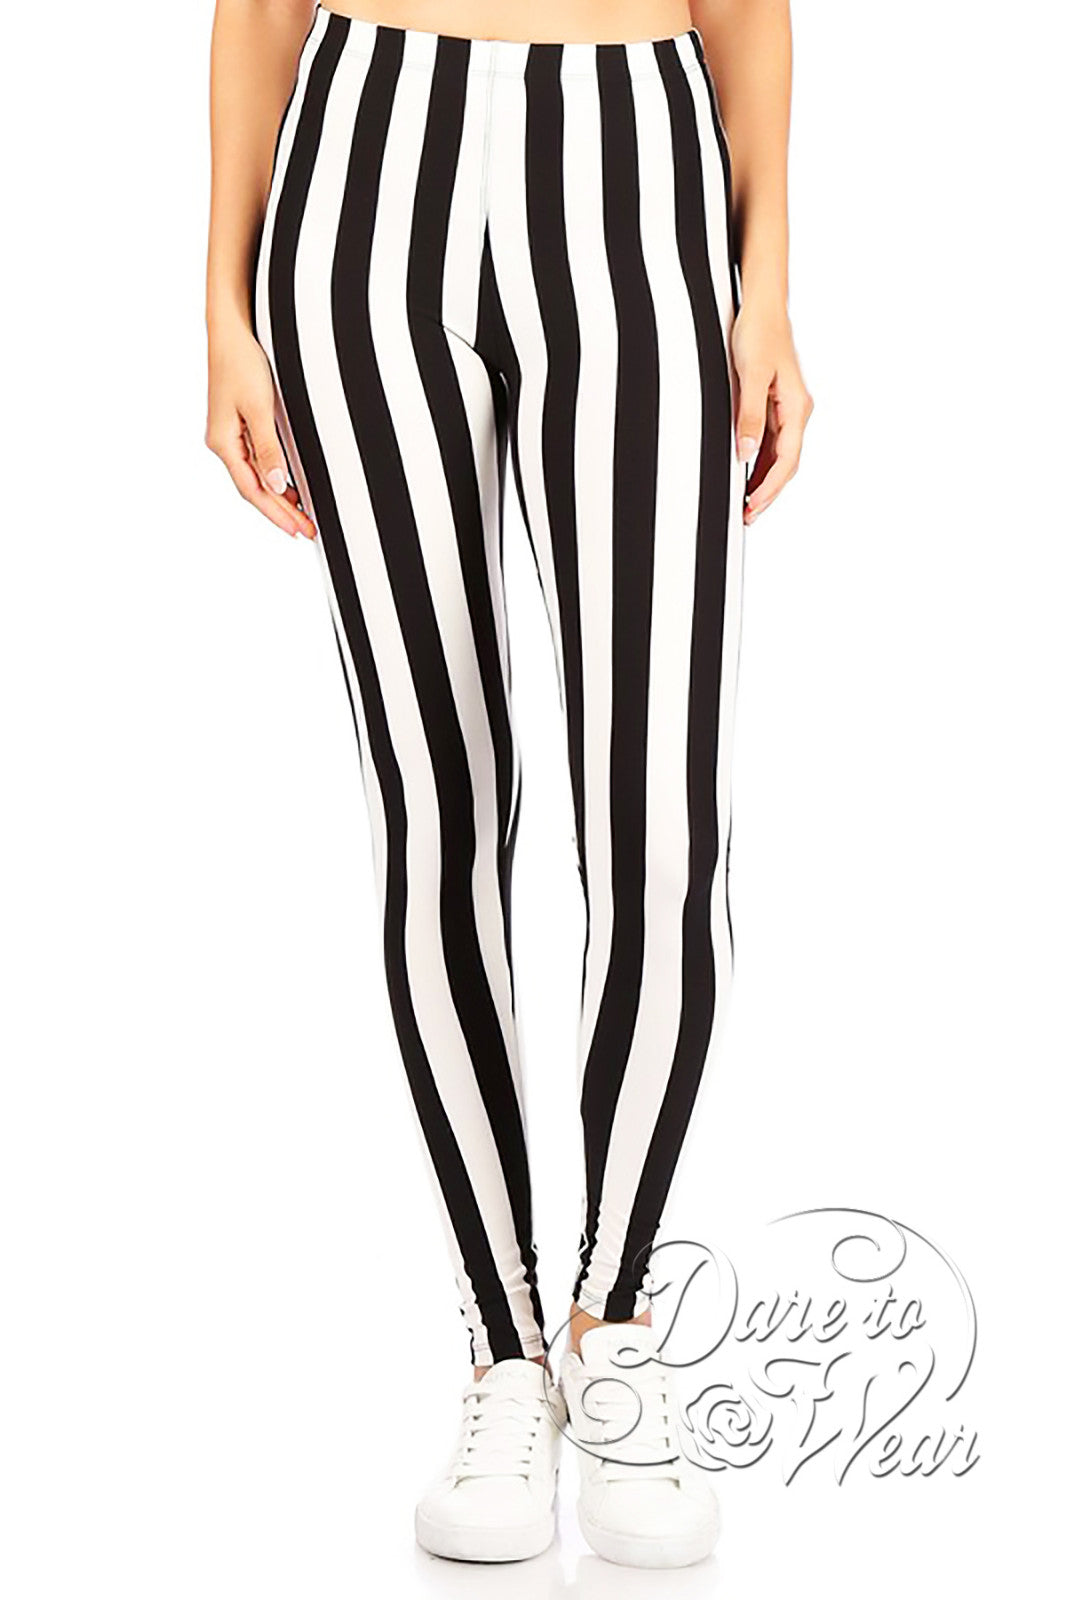 Black and White Striped Leggings, Gothic Striped Leggings, High